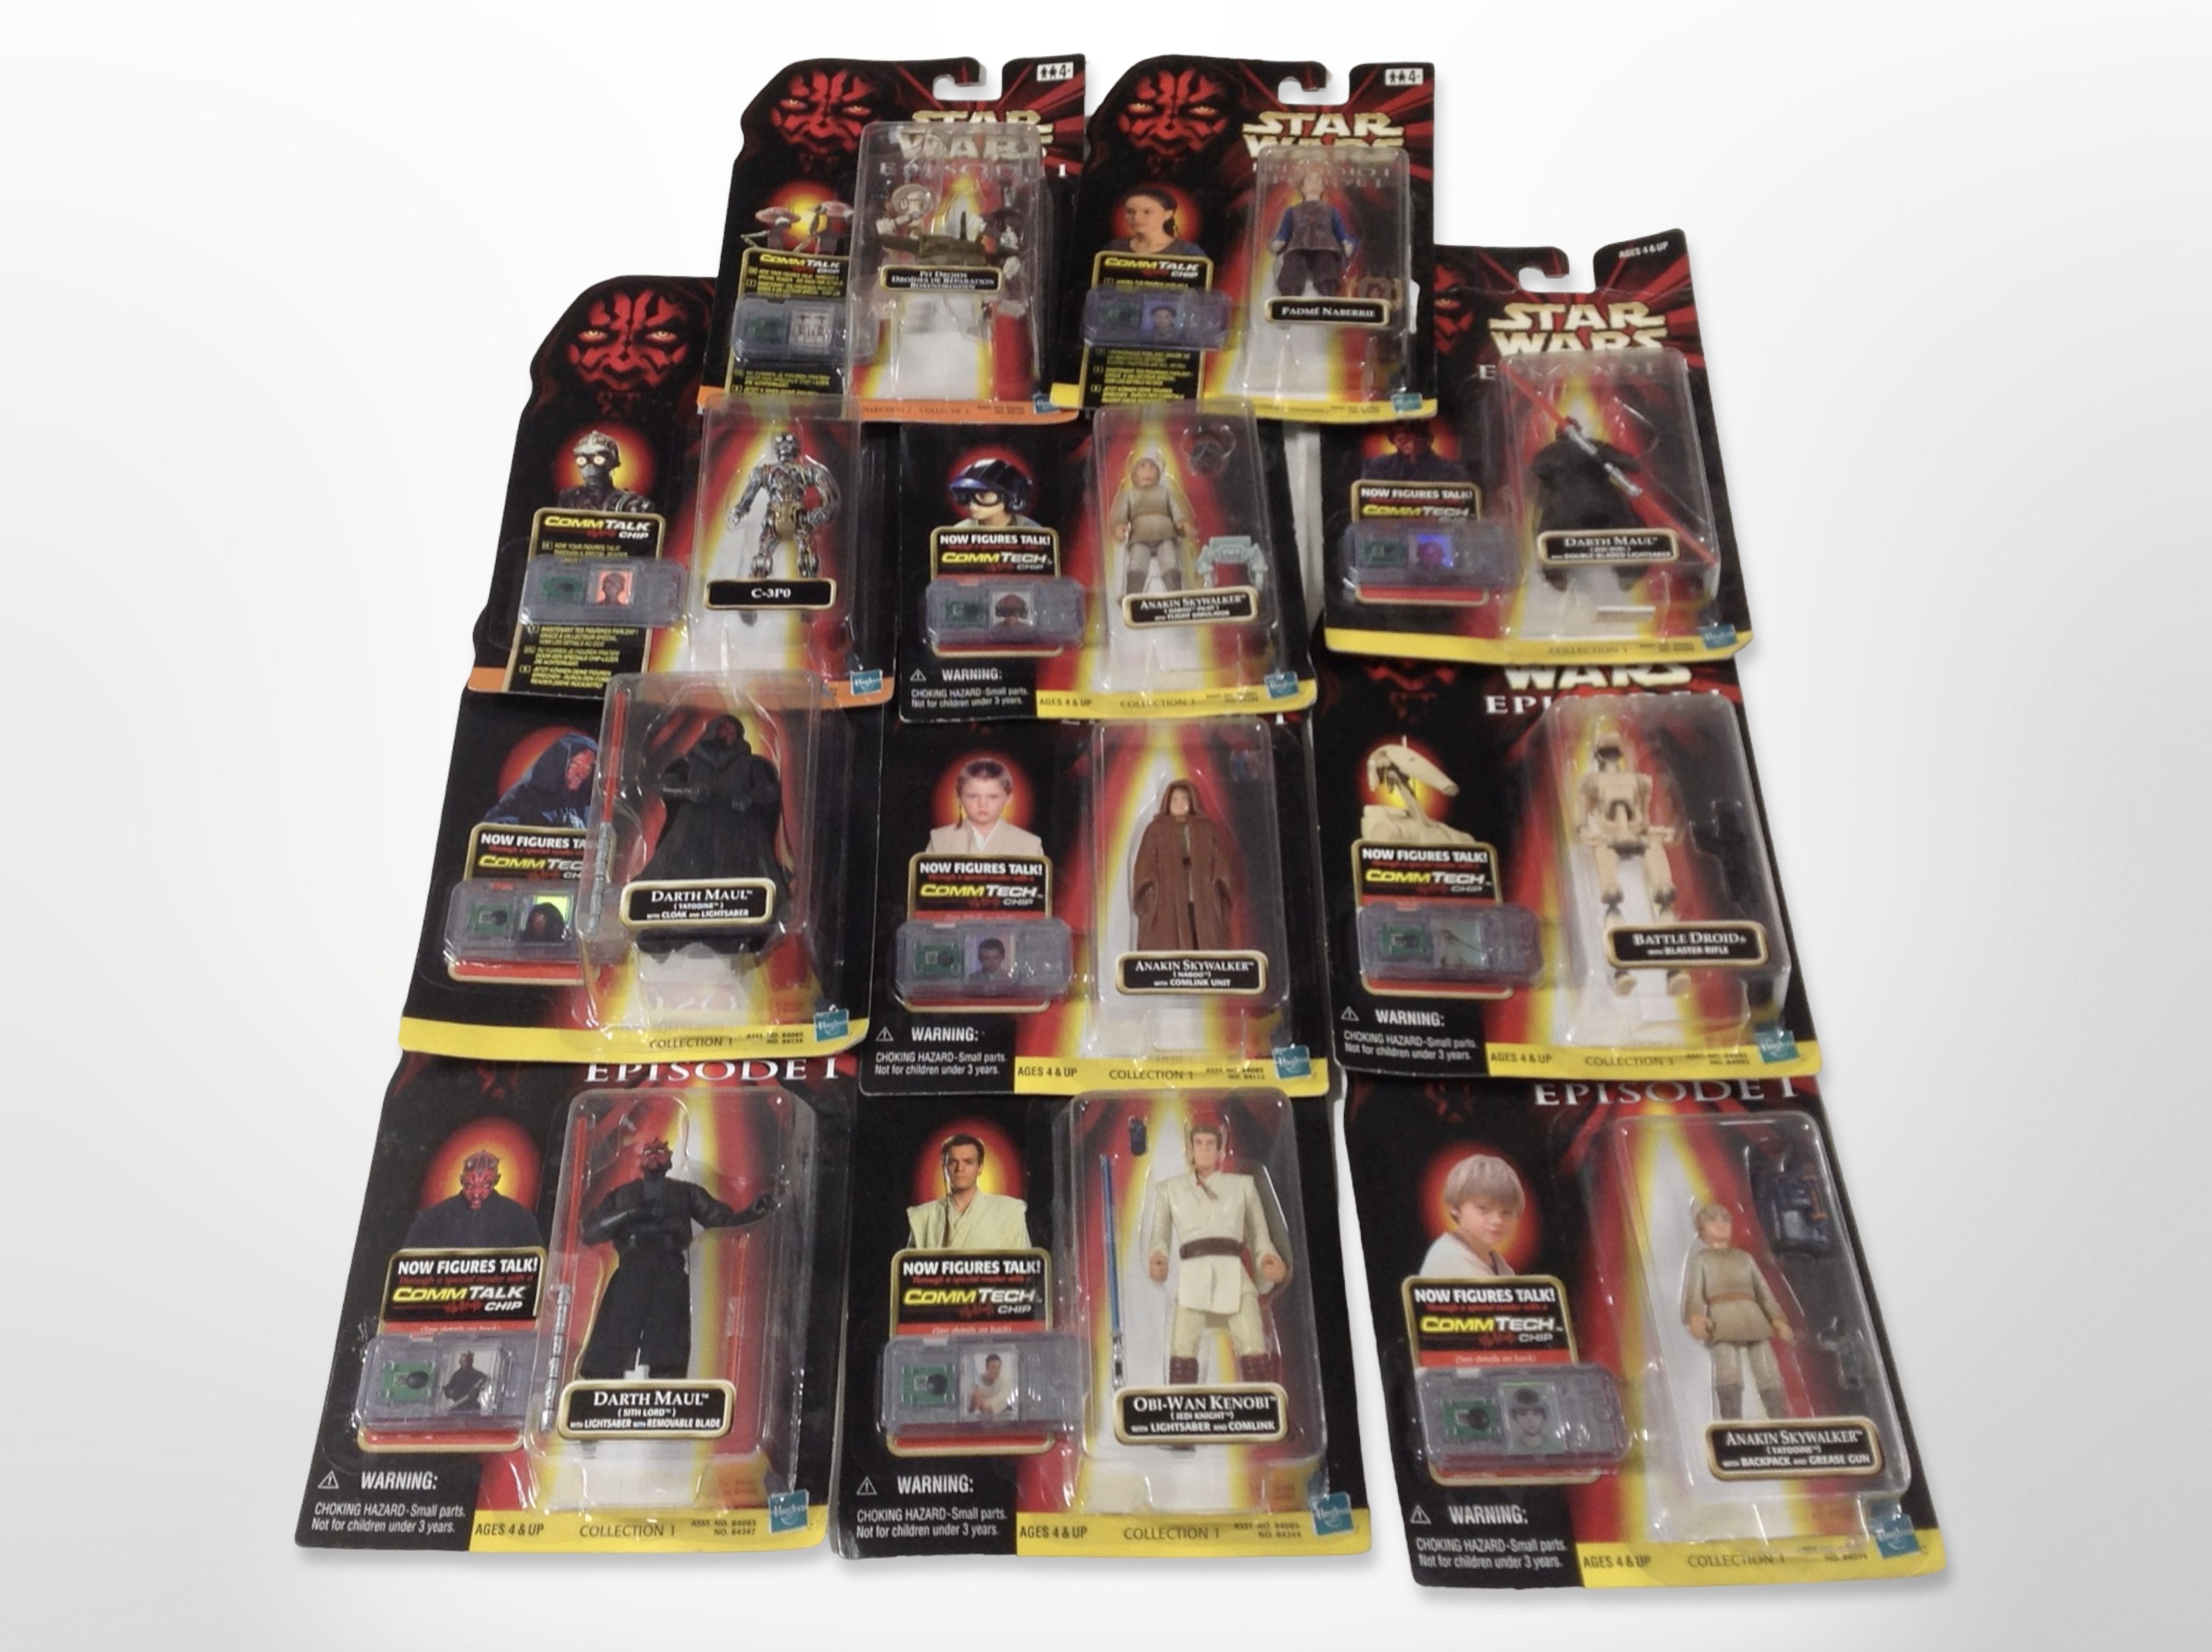 11 Hasbro Star Wars Episode I figurines, boxed.